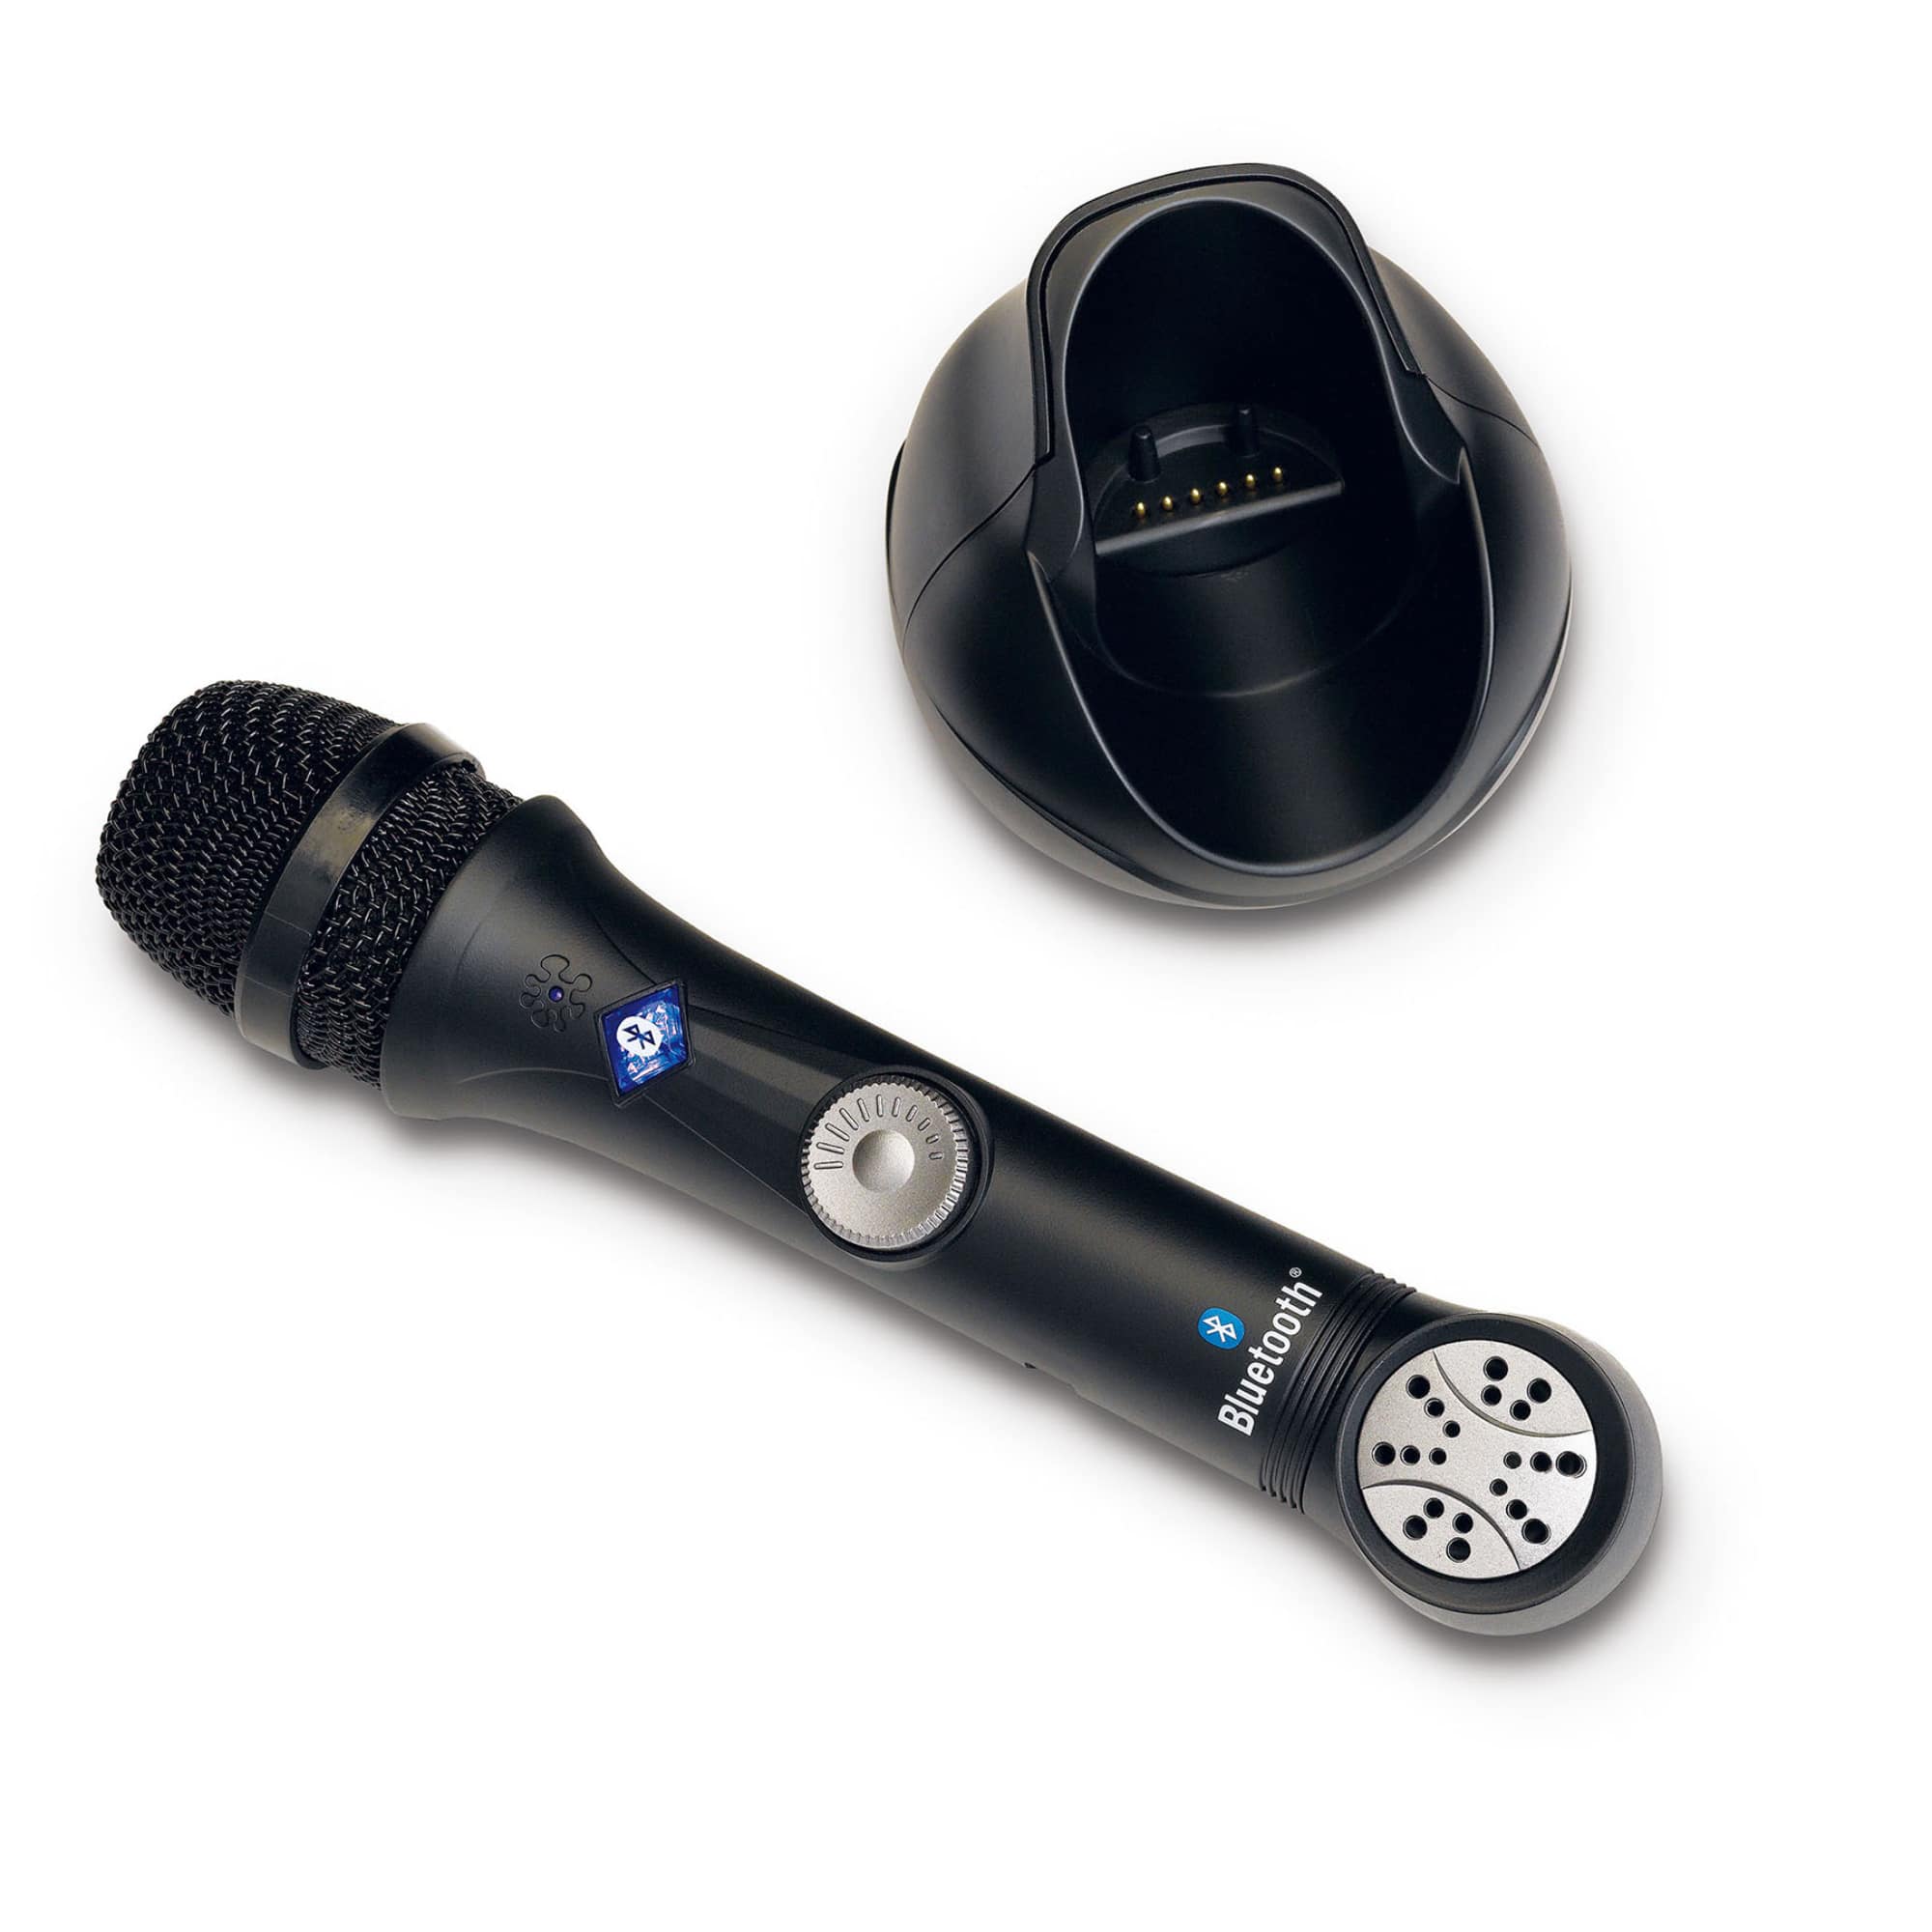 Enviro-Mental Toy Little Virtuoso: Sing Along Bluetooth Karaoke Microphone